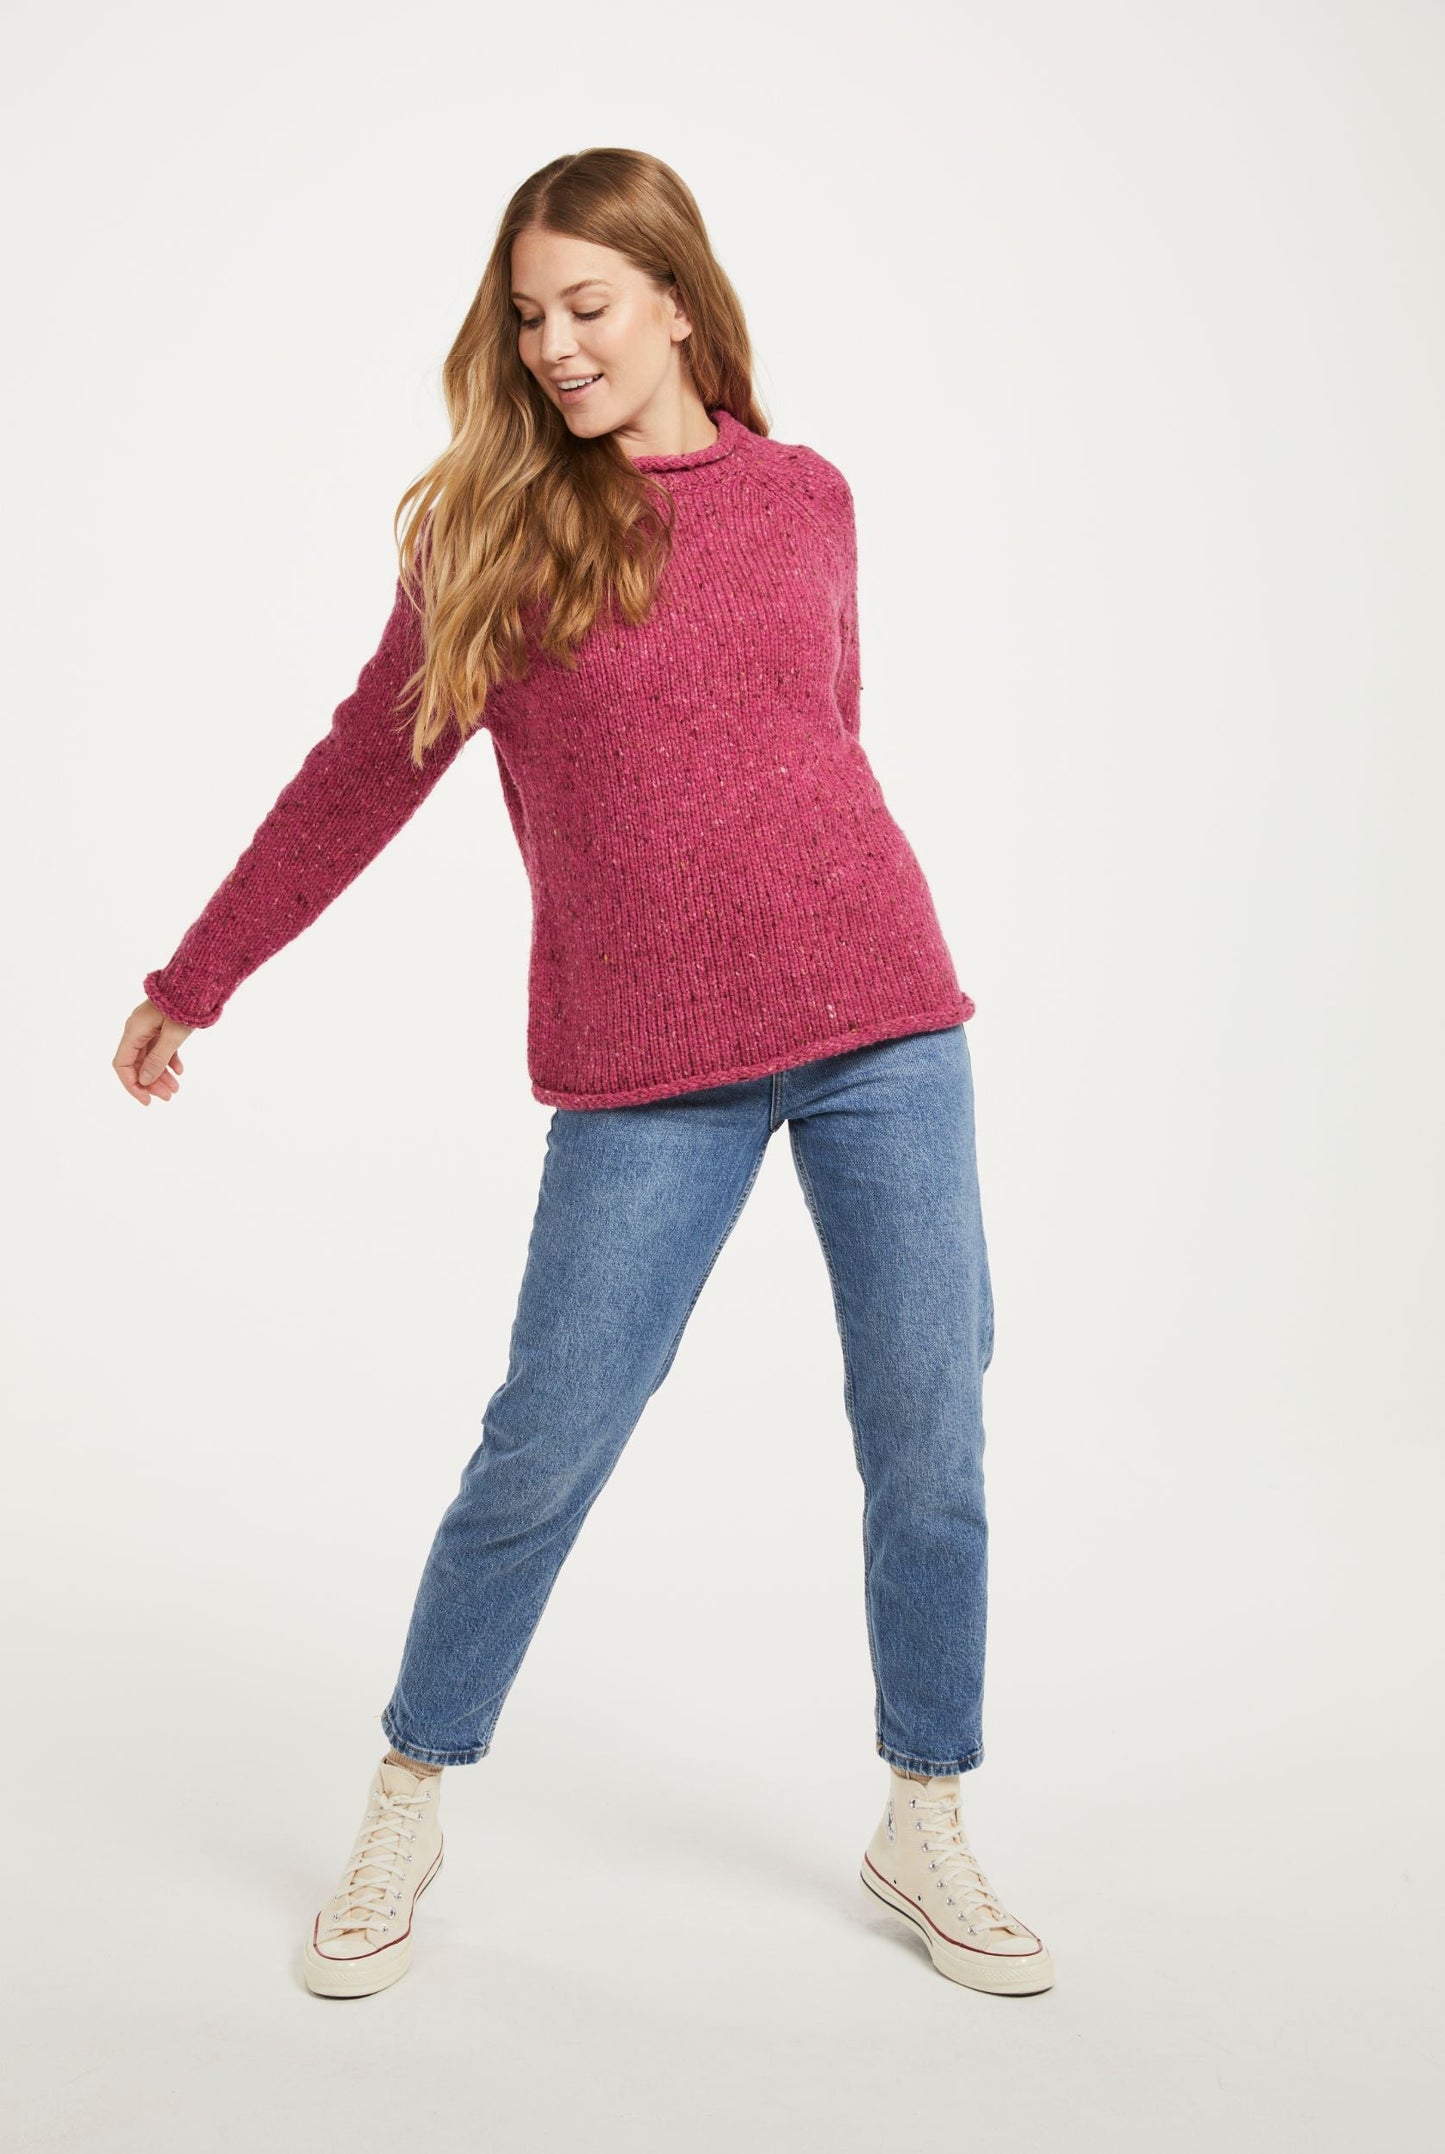 Brackloon Tweed Ladies Roll Neck Pullover Sweater - Pink